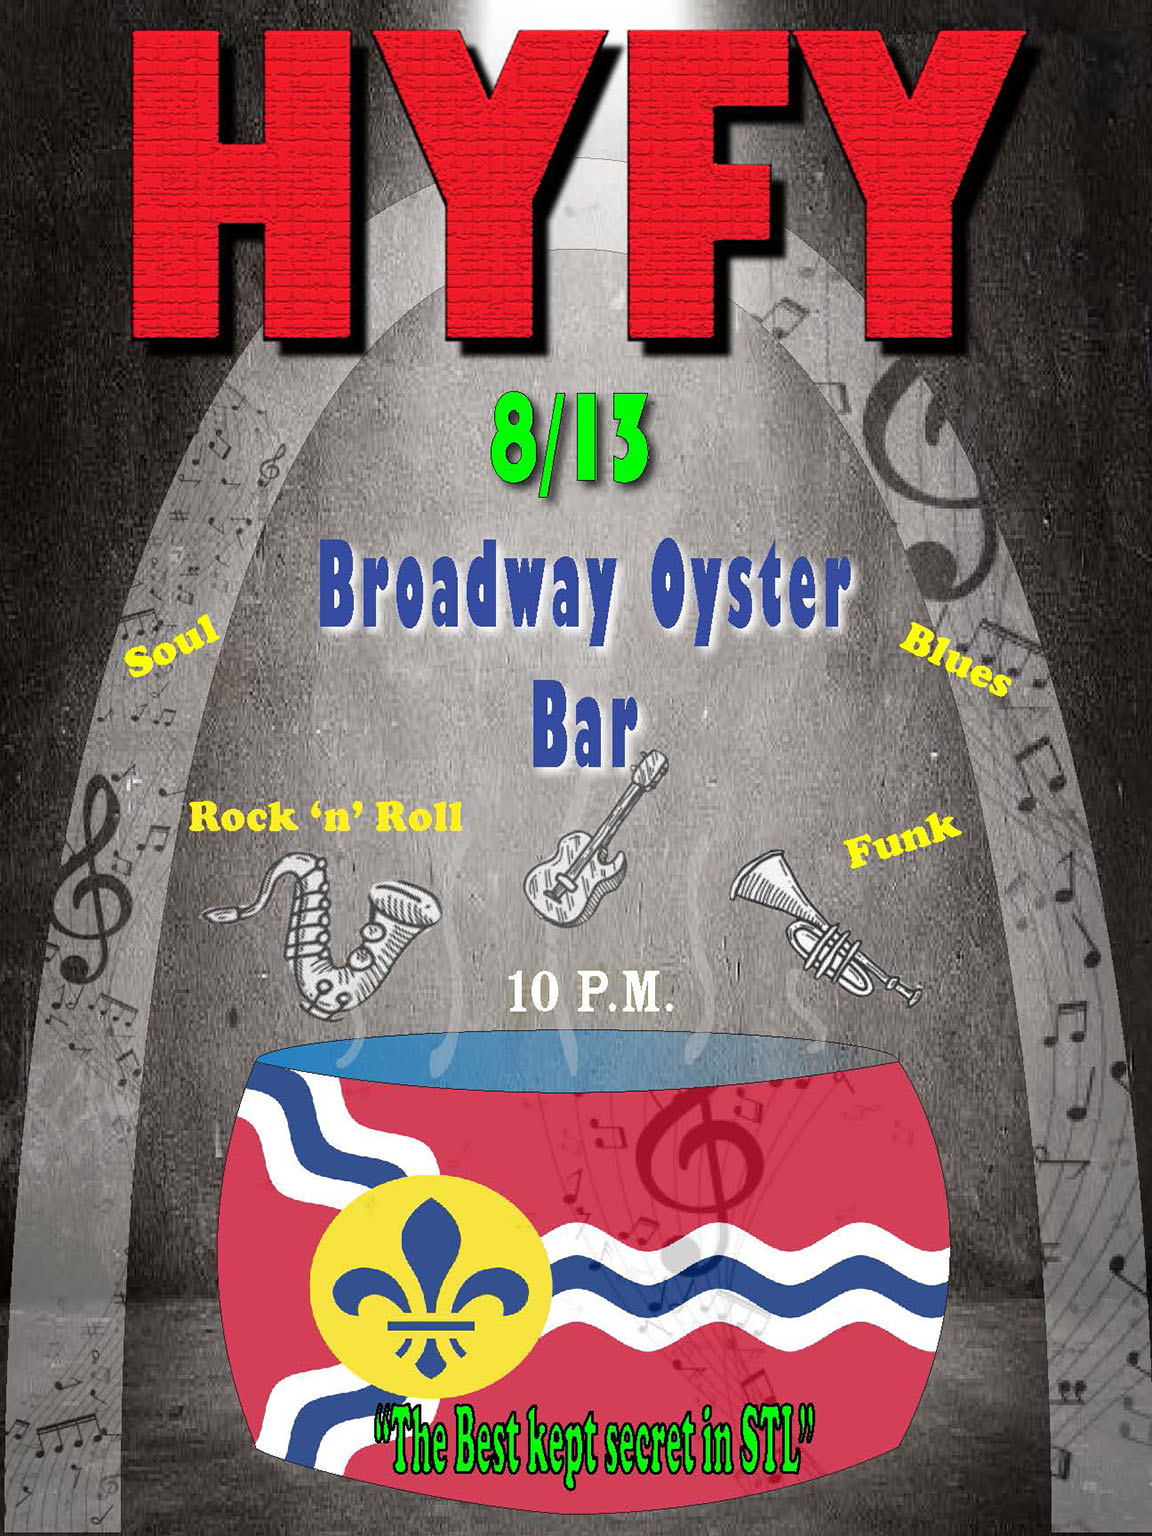 Broadway-Oyster-Bar  HYFY  image